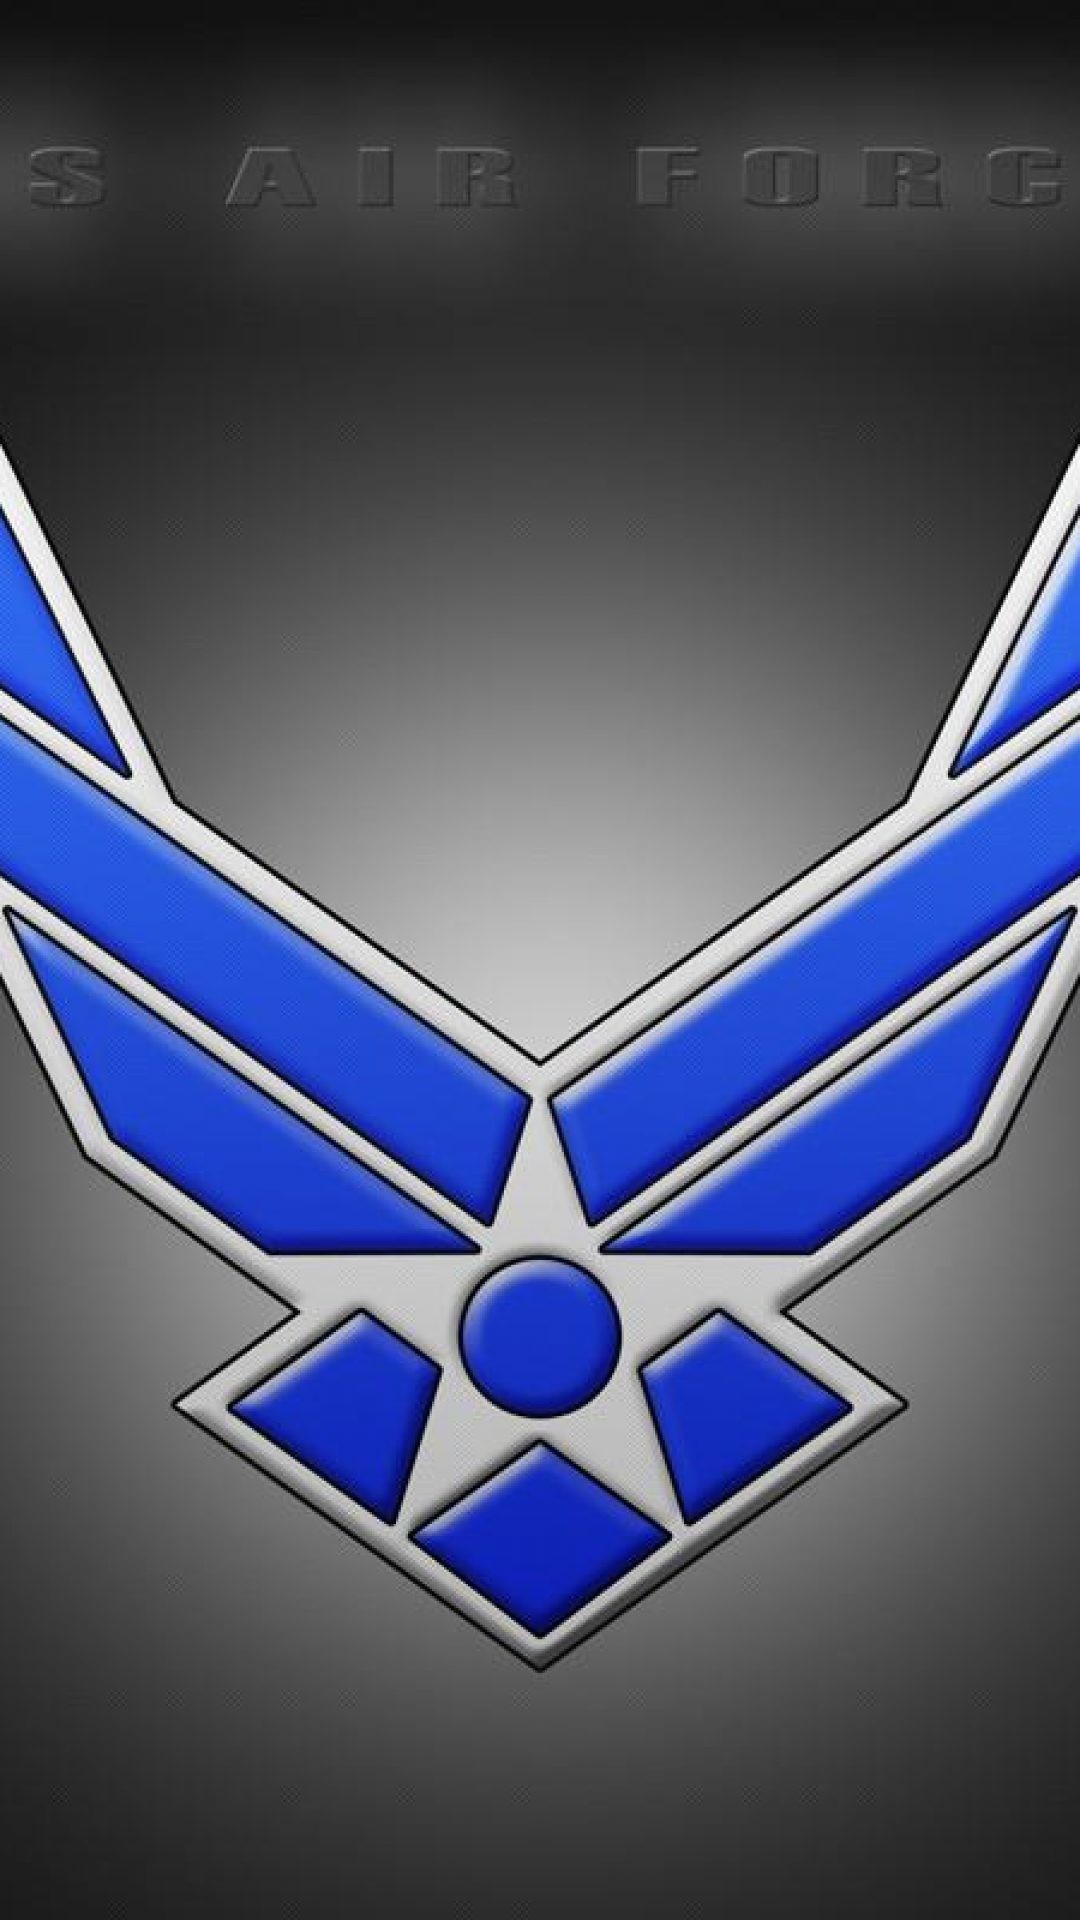 indian air force logo hd wallpaper,blue,emblem,logo,electric blue,symbol